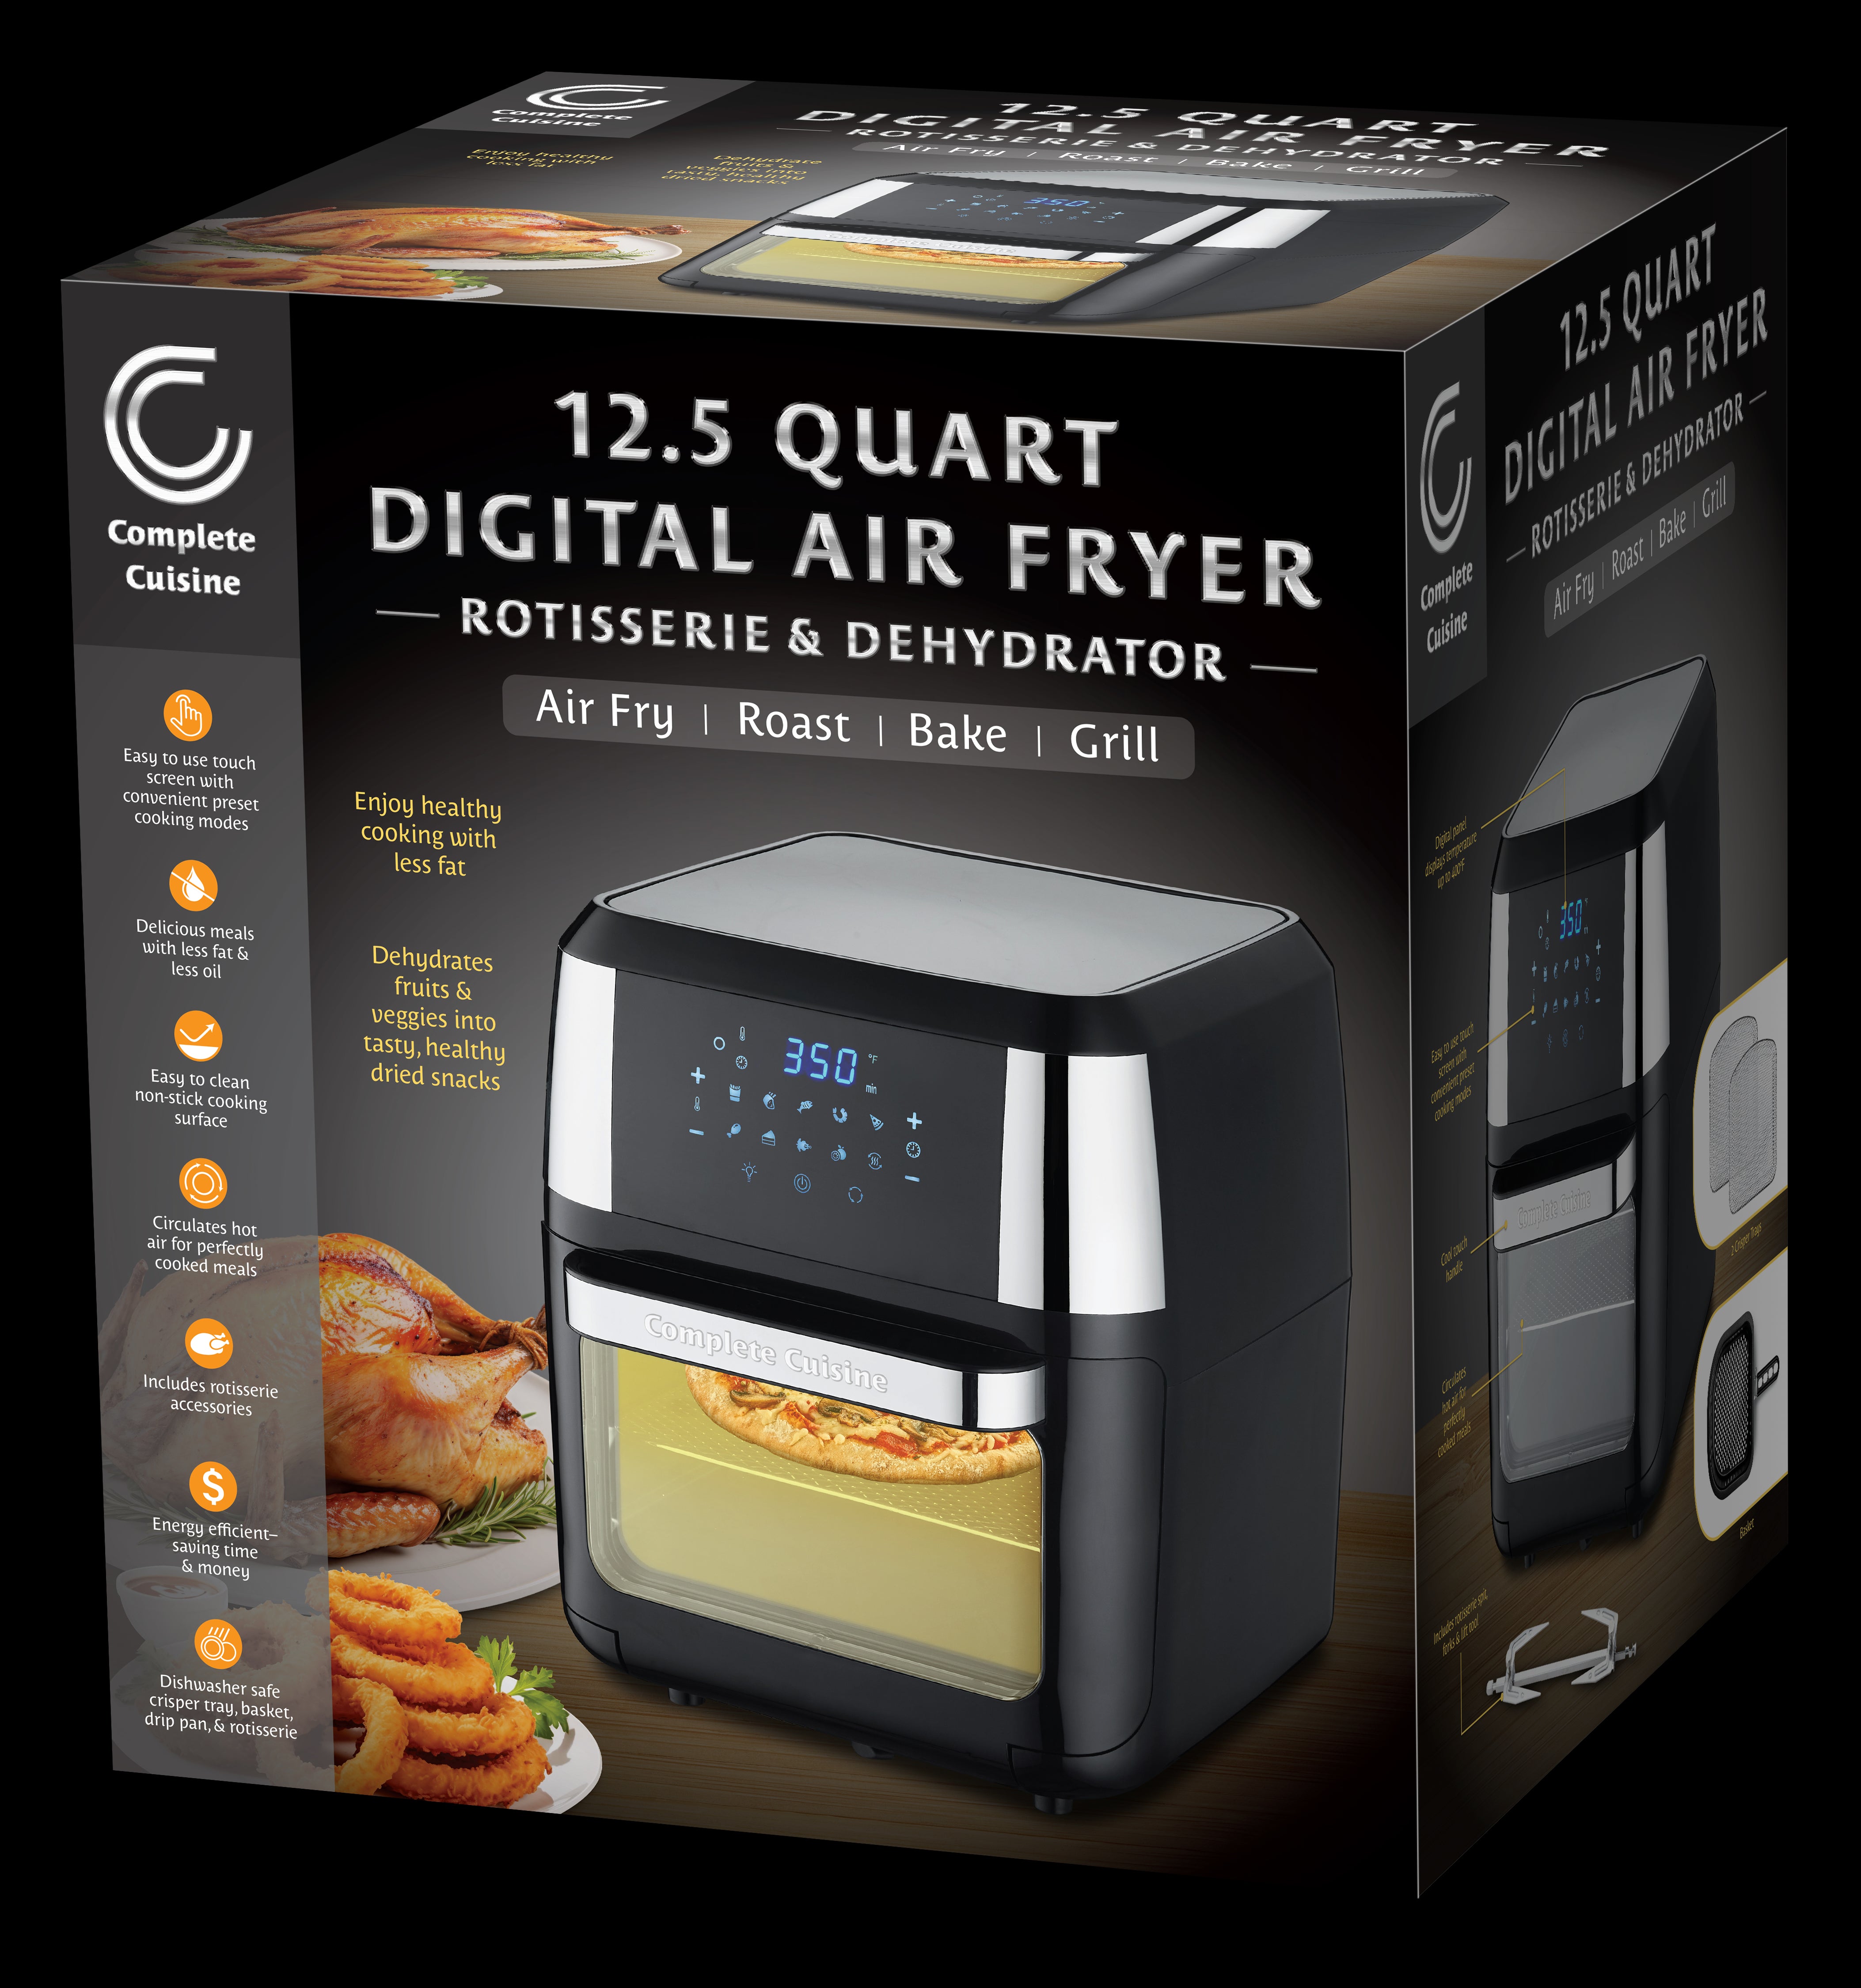 Complete Cuisine 12.5 Quart Digital Air Fryer- Rotisserie & Dehydrator